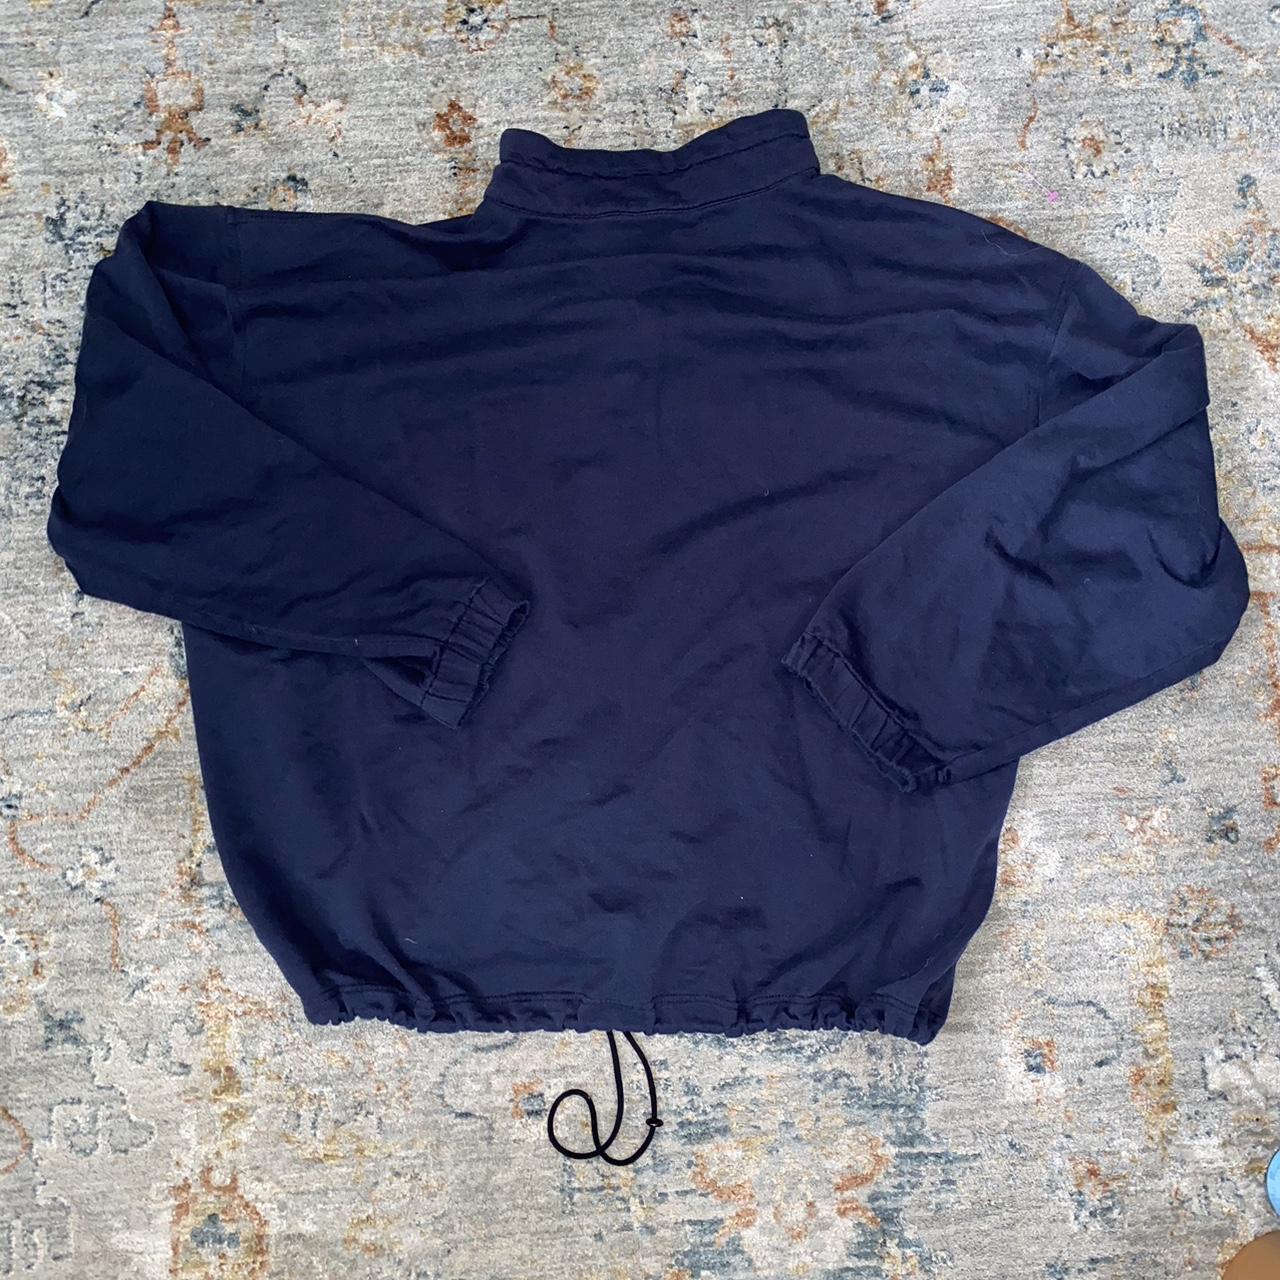 Champion vintage quarter zip sweater. Blue/gray. Has... - Depop